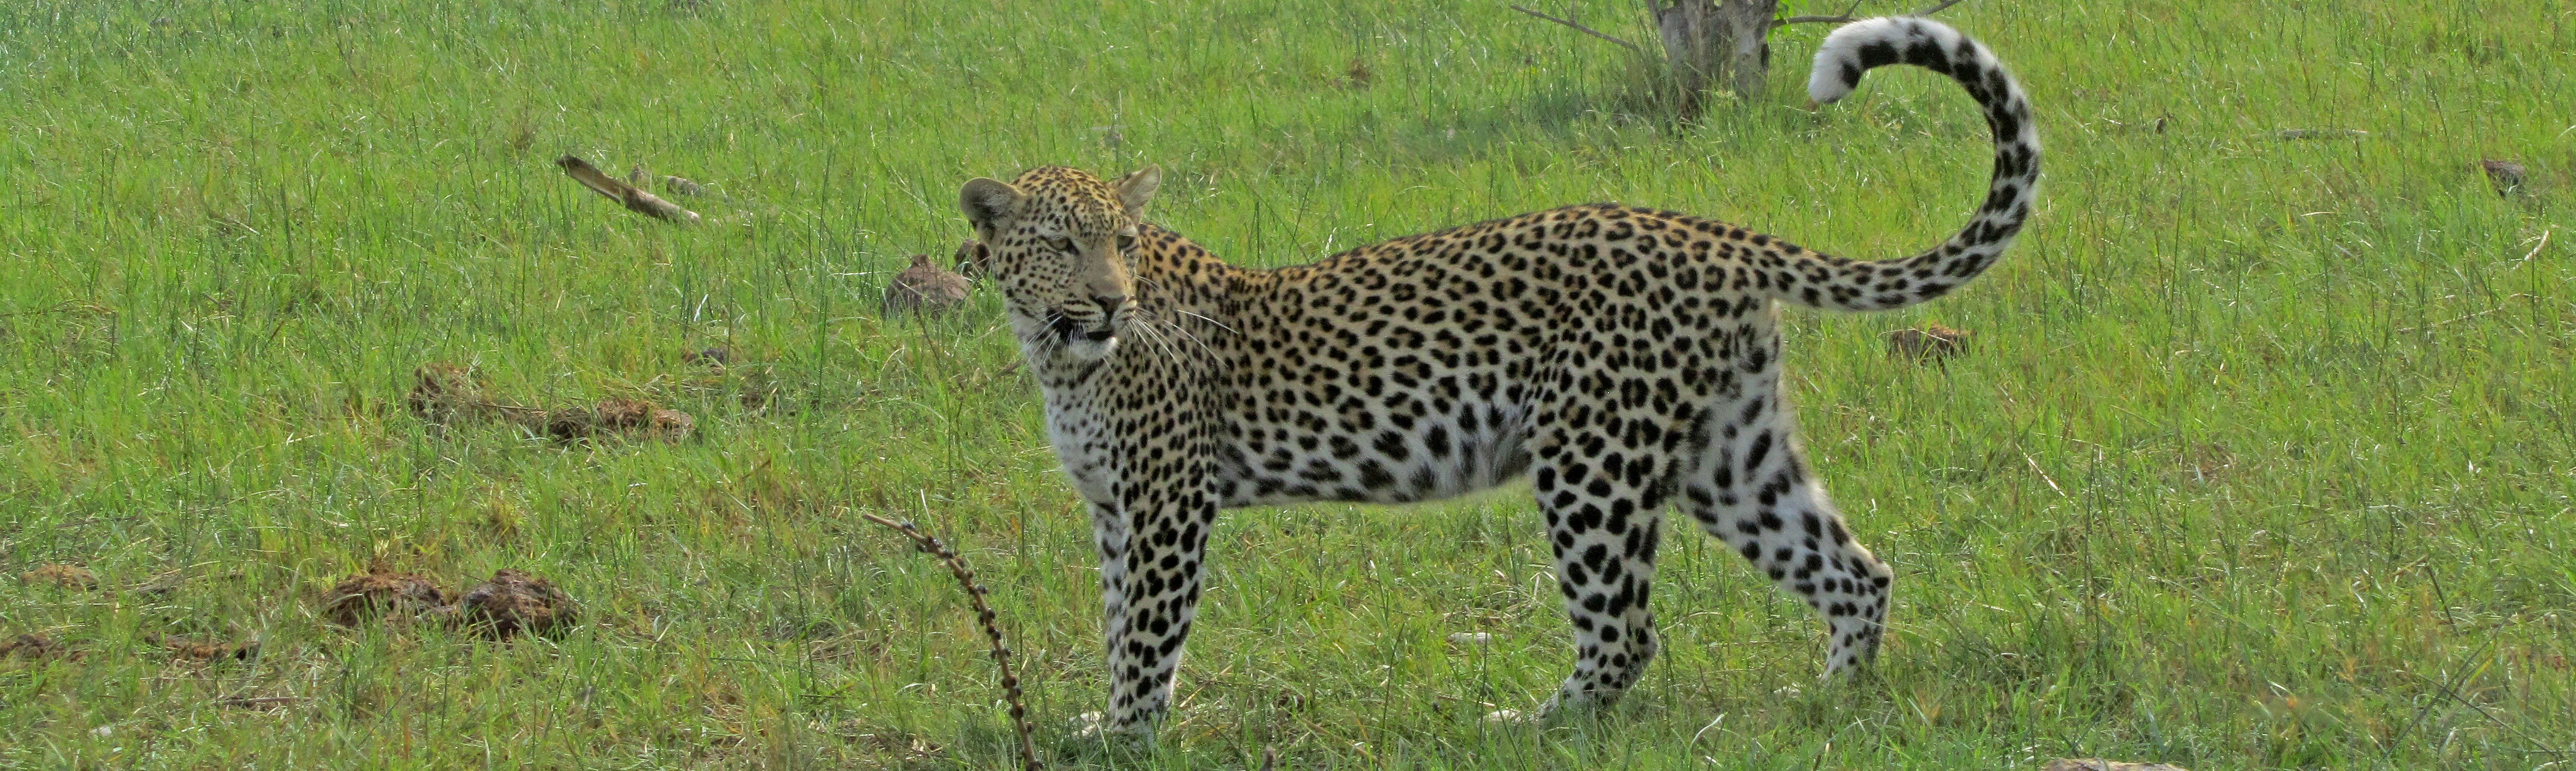 Mashatu—safaris, reviews, photos, vaccinations